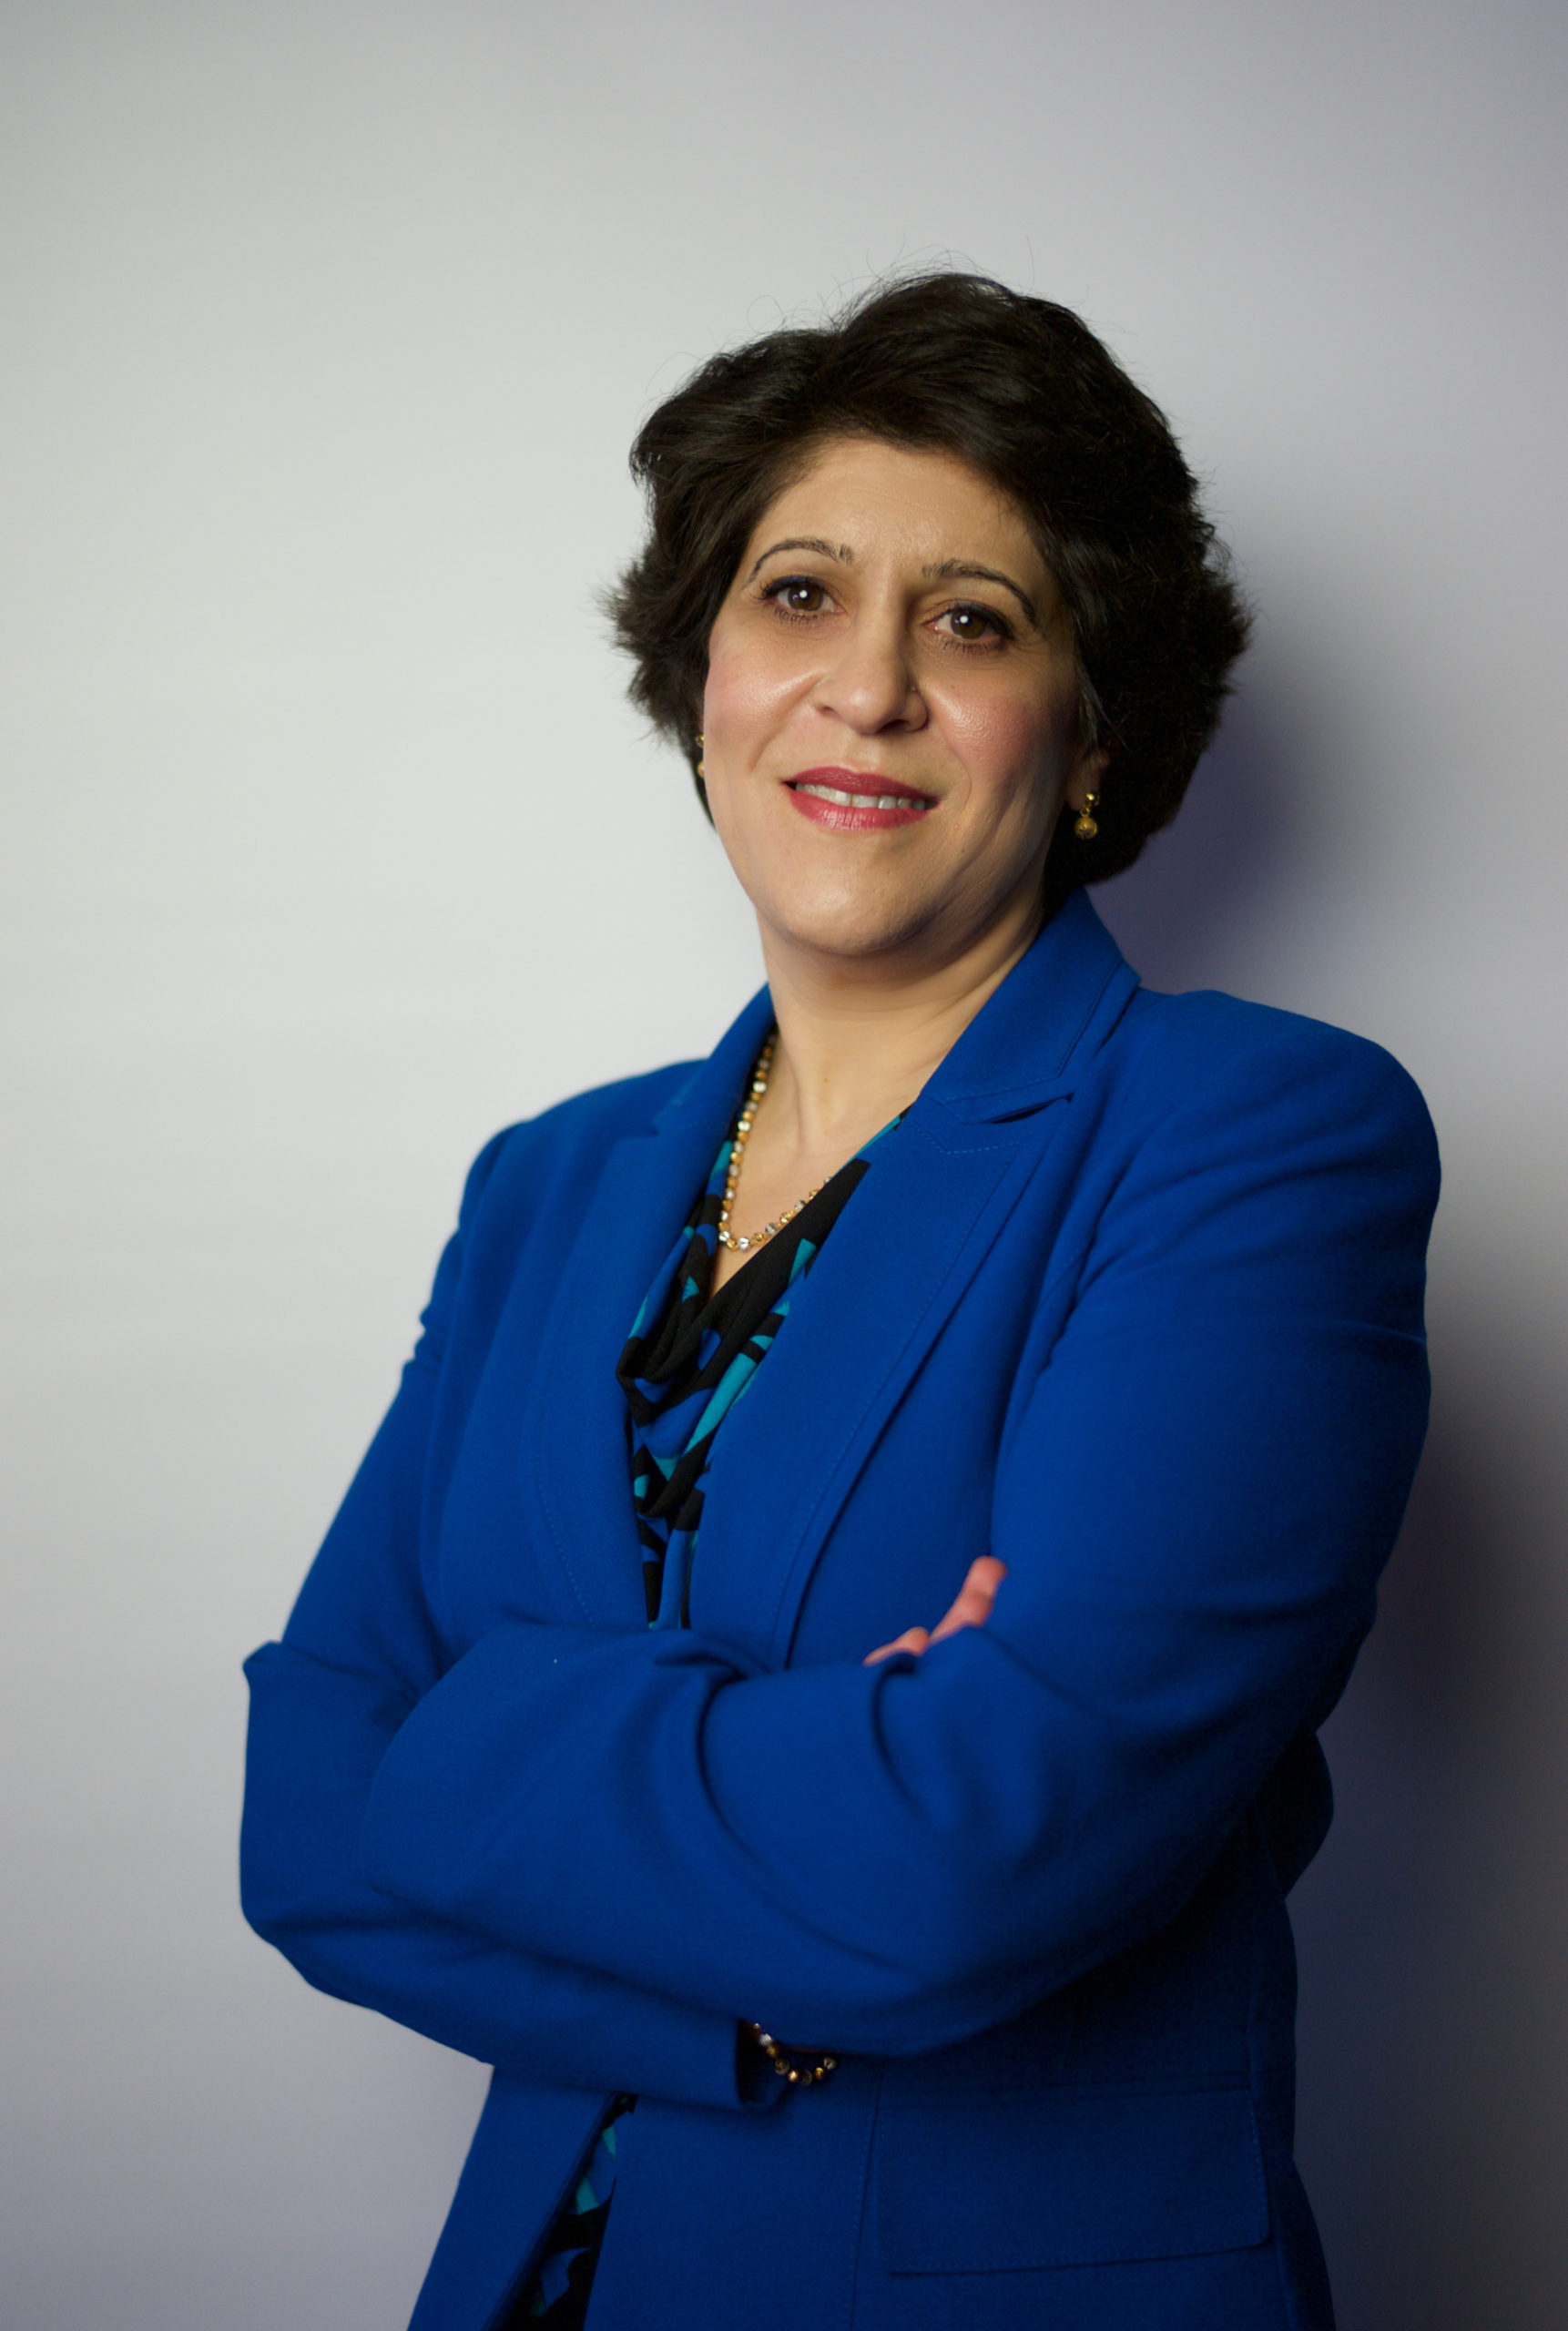 Dr. Nadine Alameh interview by Ishveena Singh